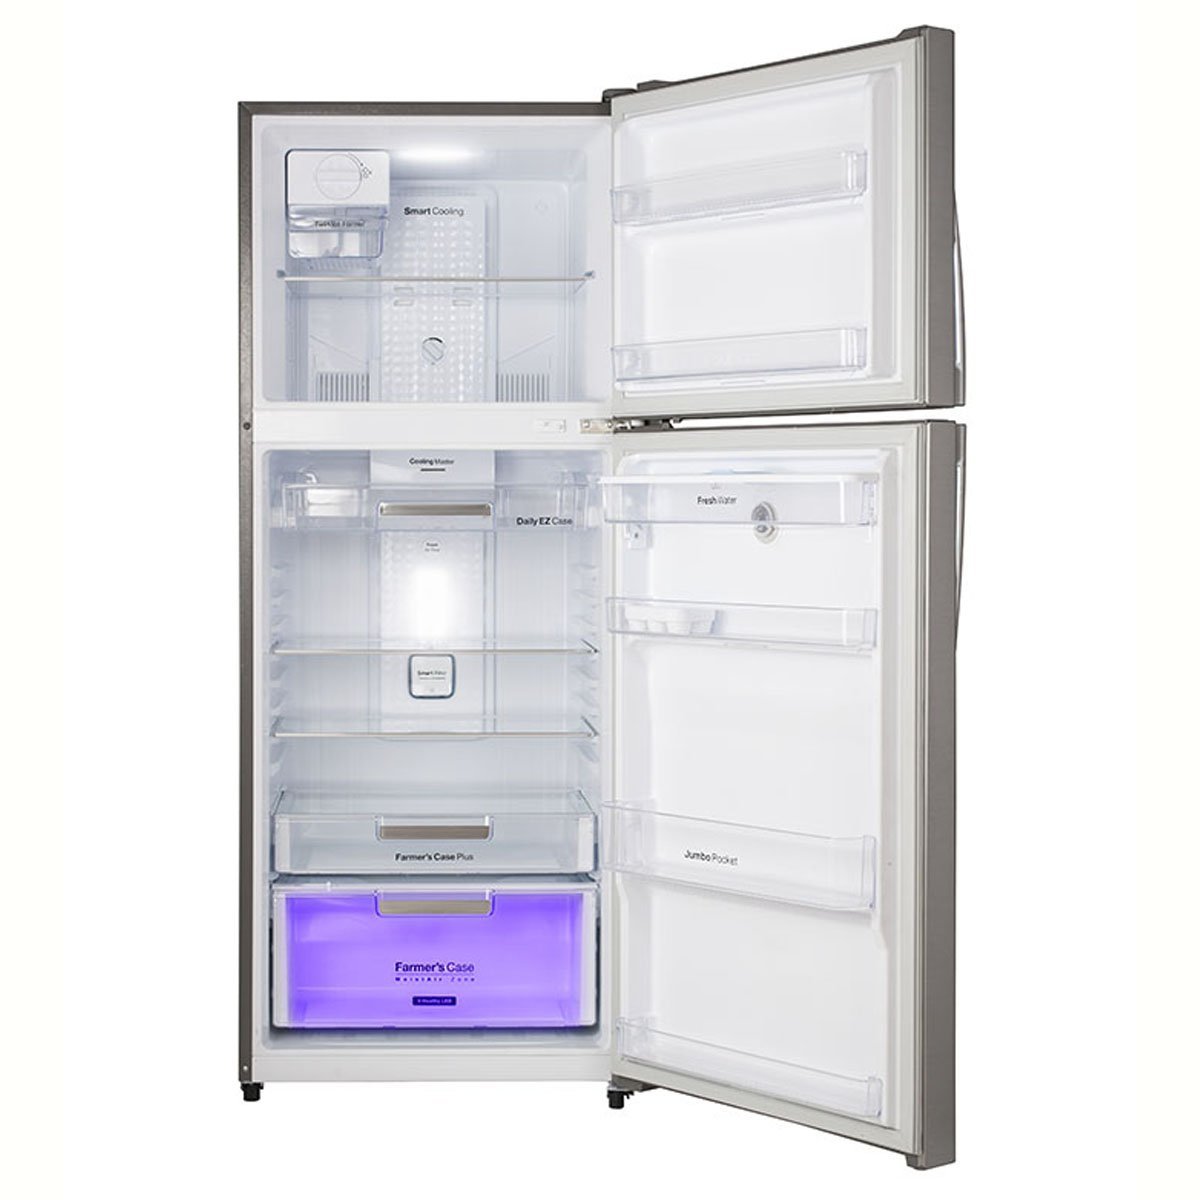 Refrigerador Daewoo Top Mount 16 Pies Glam Silver